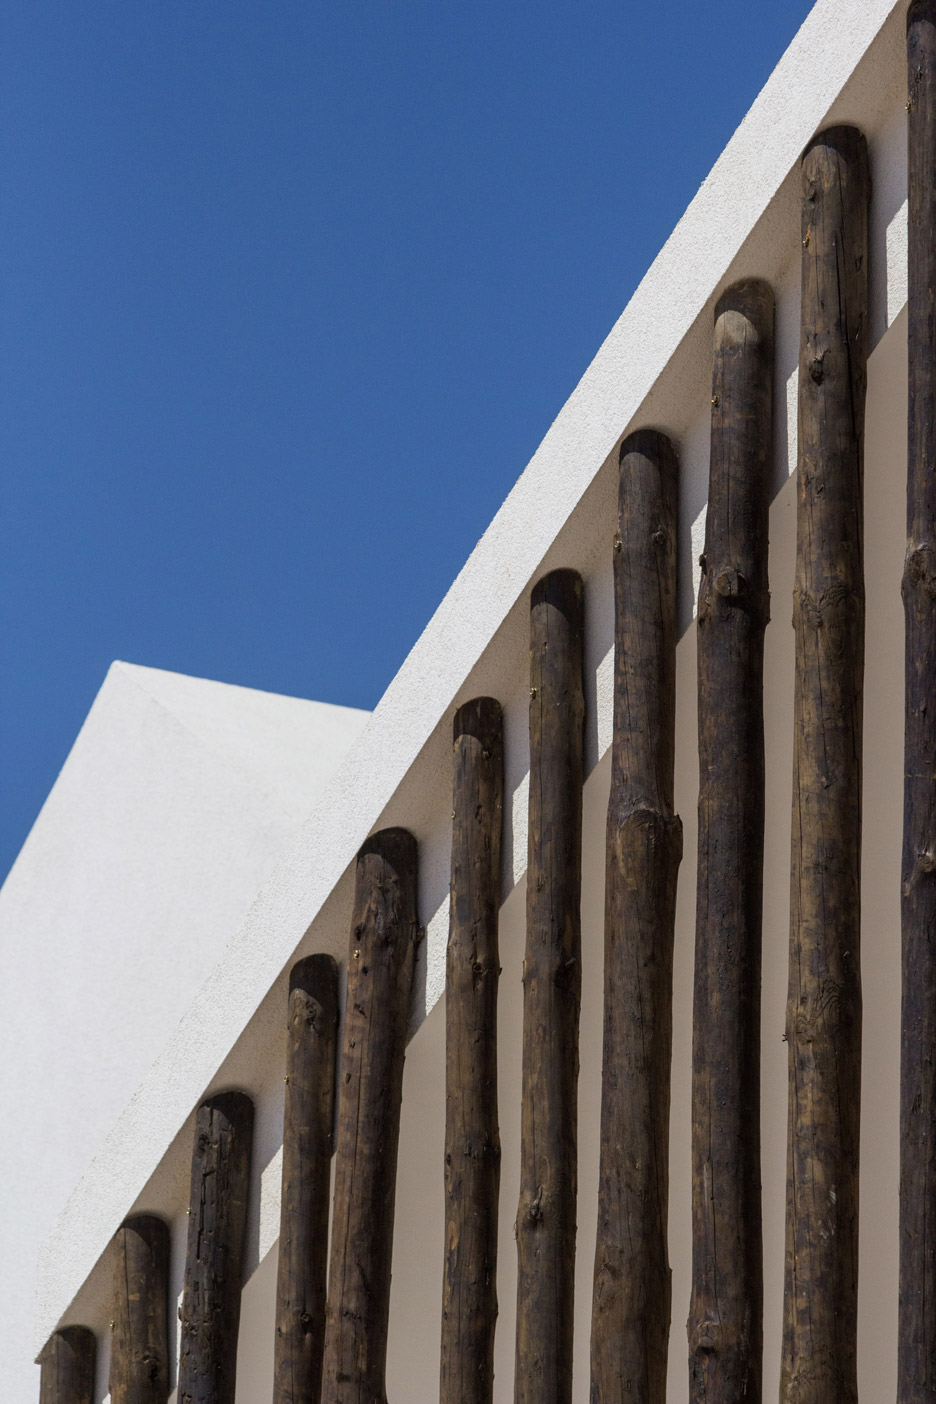 Sobreiras Alentejo Country Hotel by Future Architecture Thinking